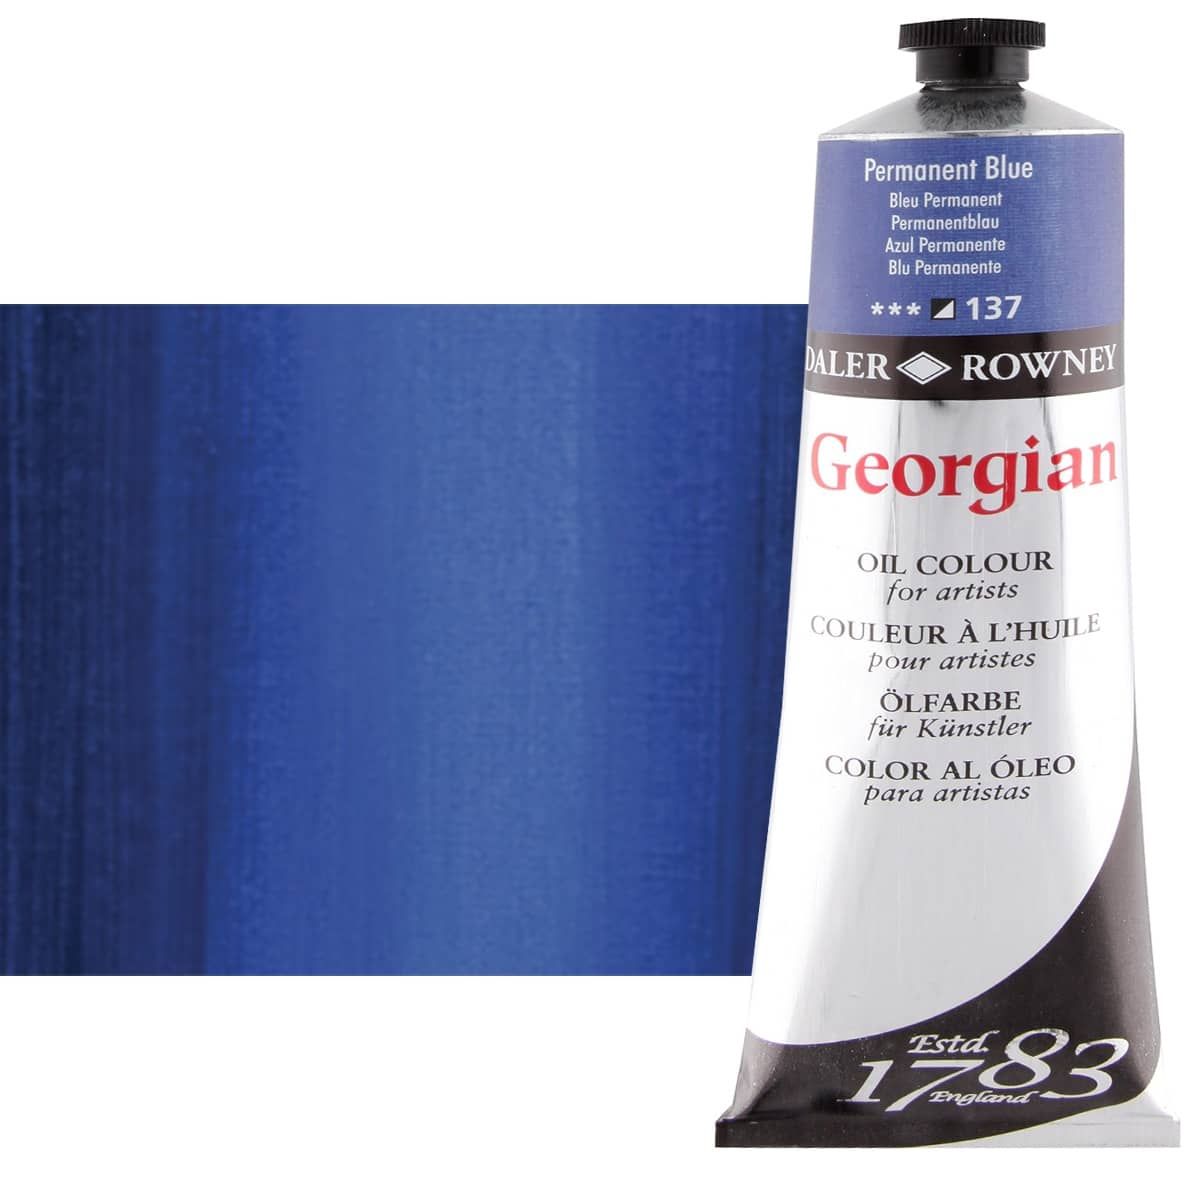 Daler-Rowney Georgian Oil Color 225ml Tube - Permanent Blue